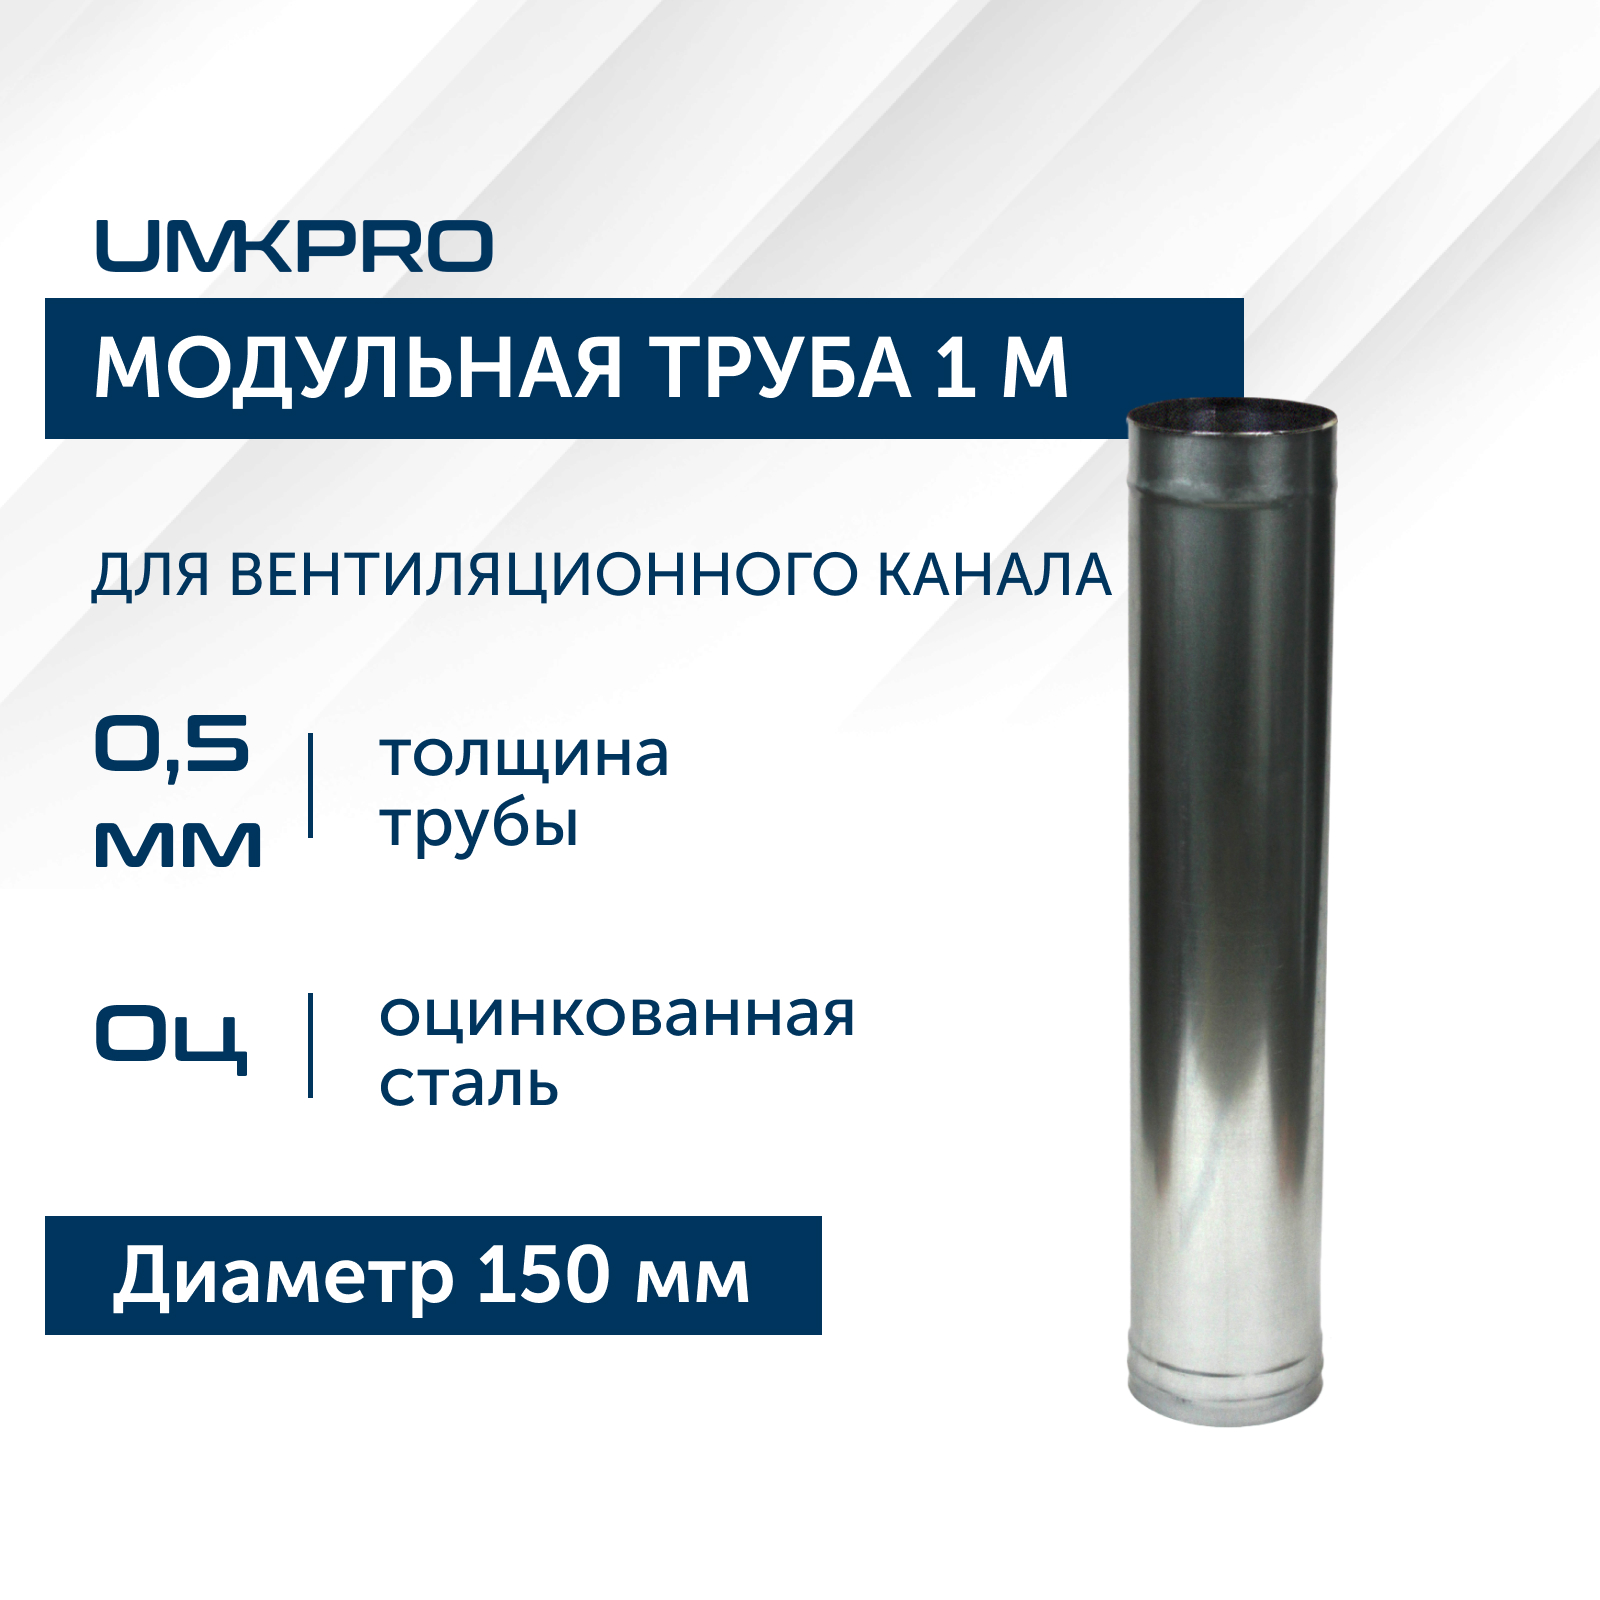 Труба модульная для дымохода 1 м UMKPRO, D 150, Оц/0,5мм модульная прихожая корвет 25